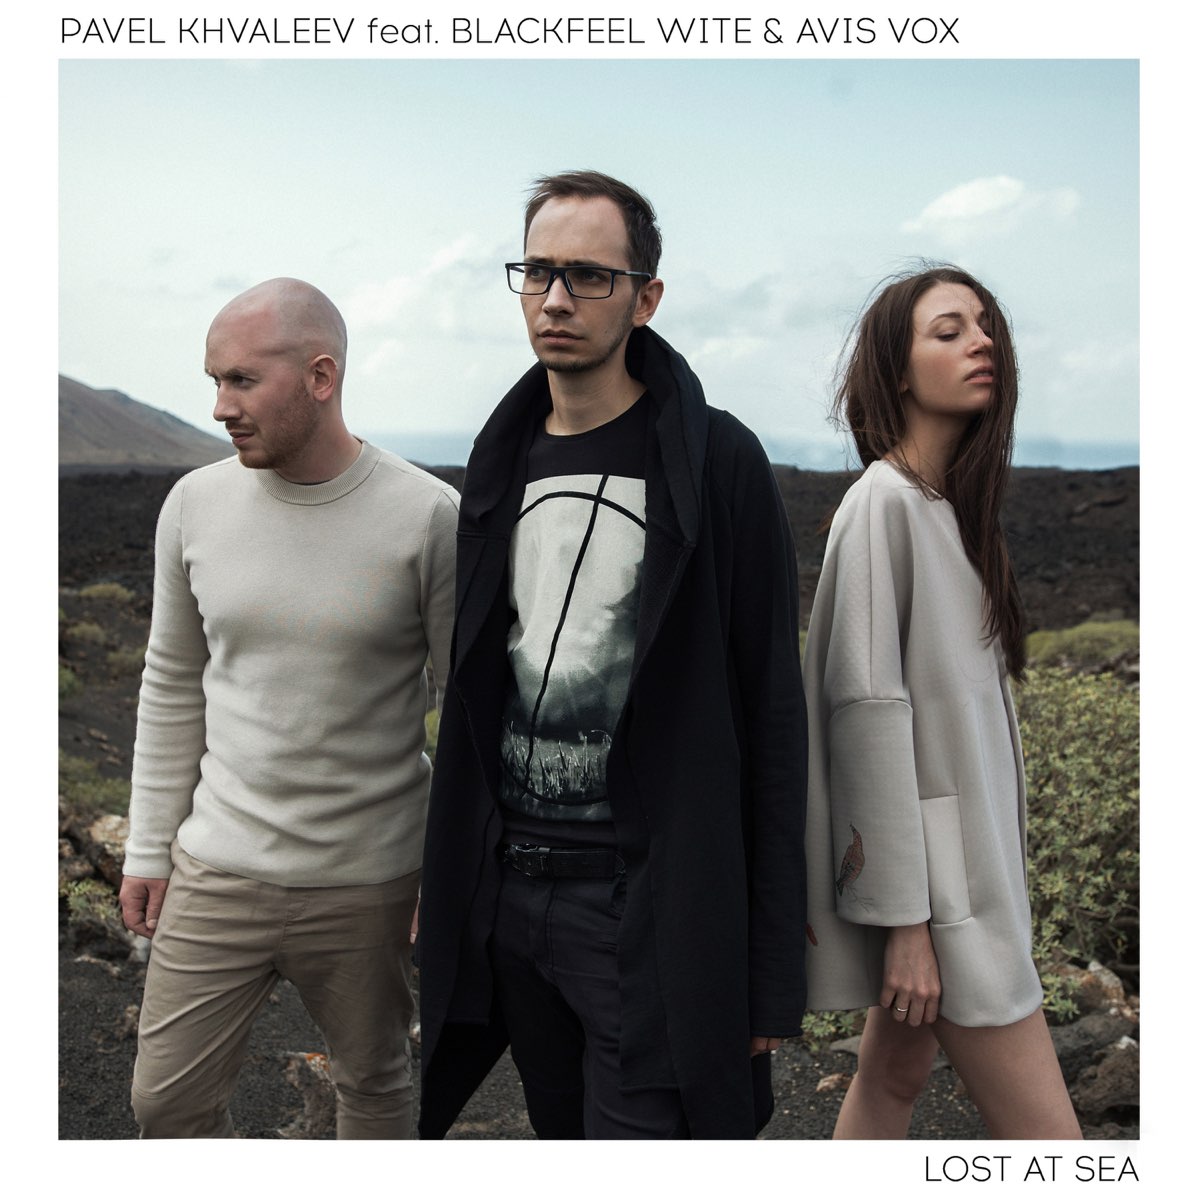 Pavel Khvaleev, Avis Vox, & Blackfeel Wite Lost At Sea - EP cover artwork